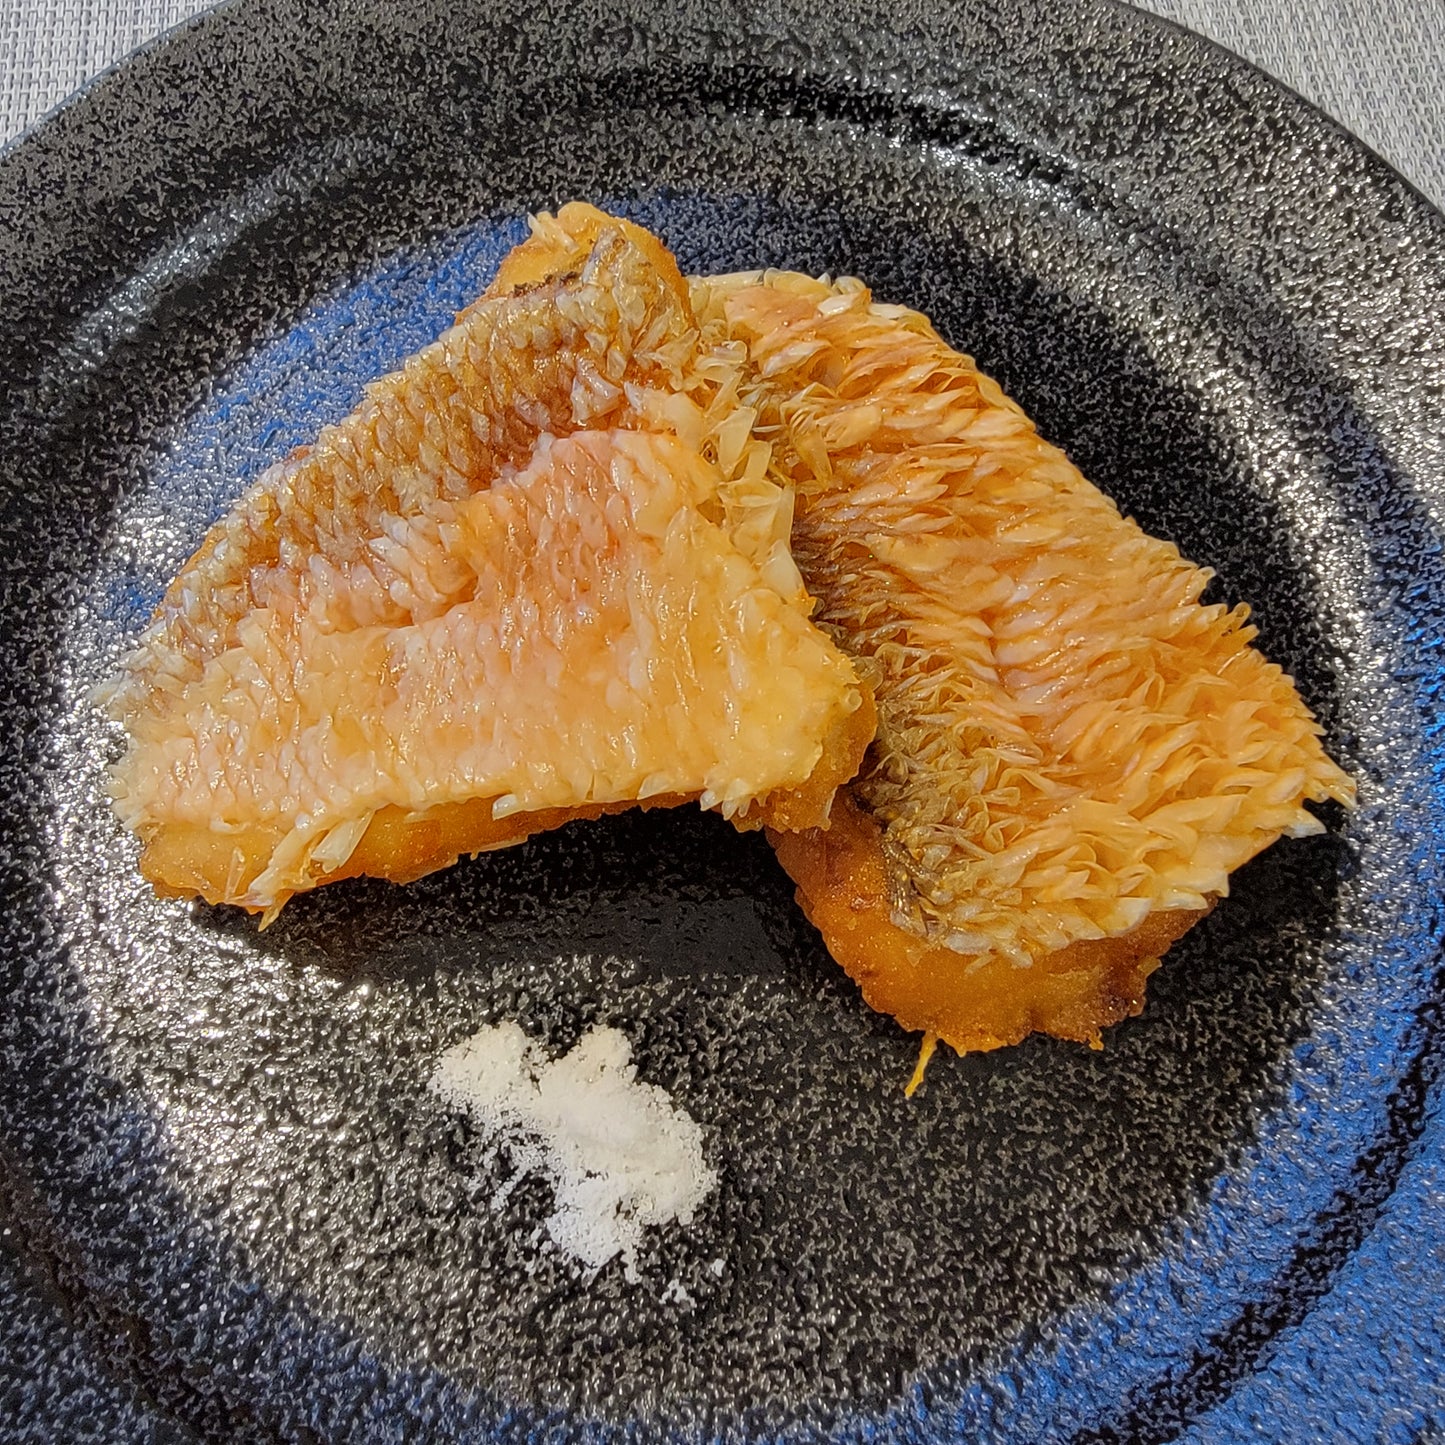 Fresh Tilefish (Amadai) 新鮮甘鯛 (馬頭魚)